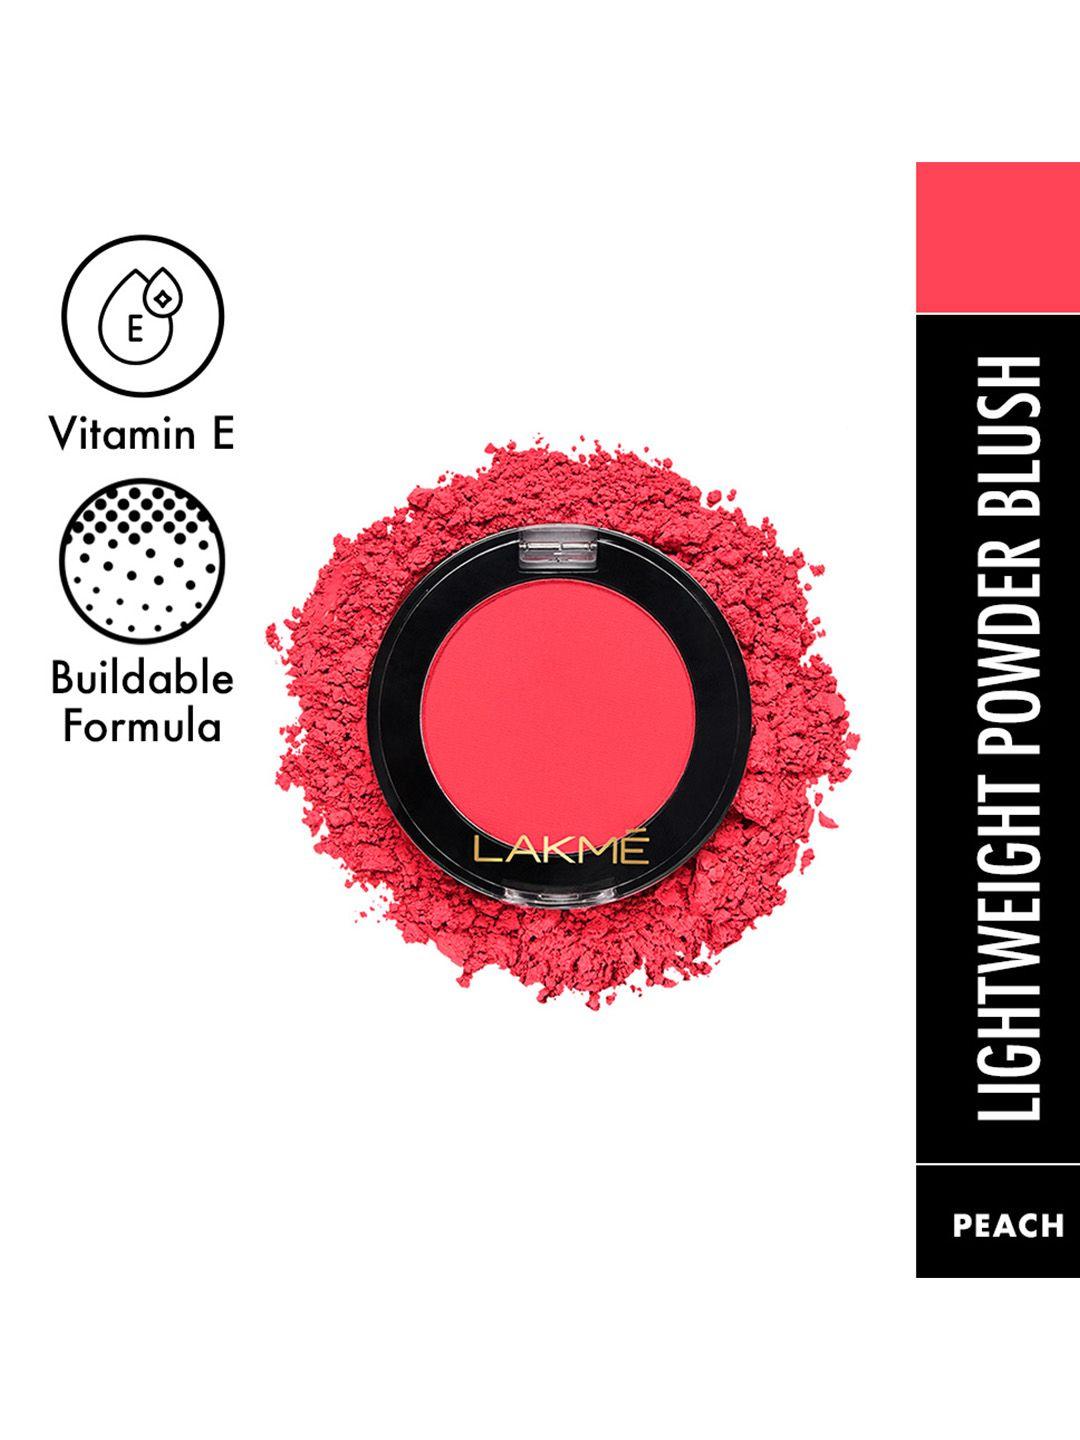 lakme face it lightweight powder blush with vitamin e 4 g - peppy peach b4